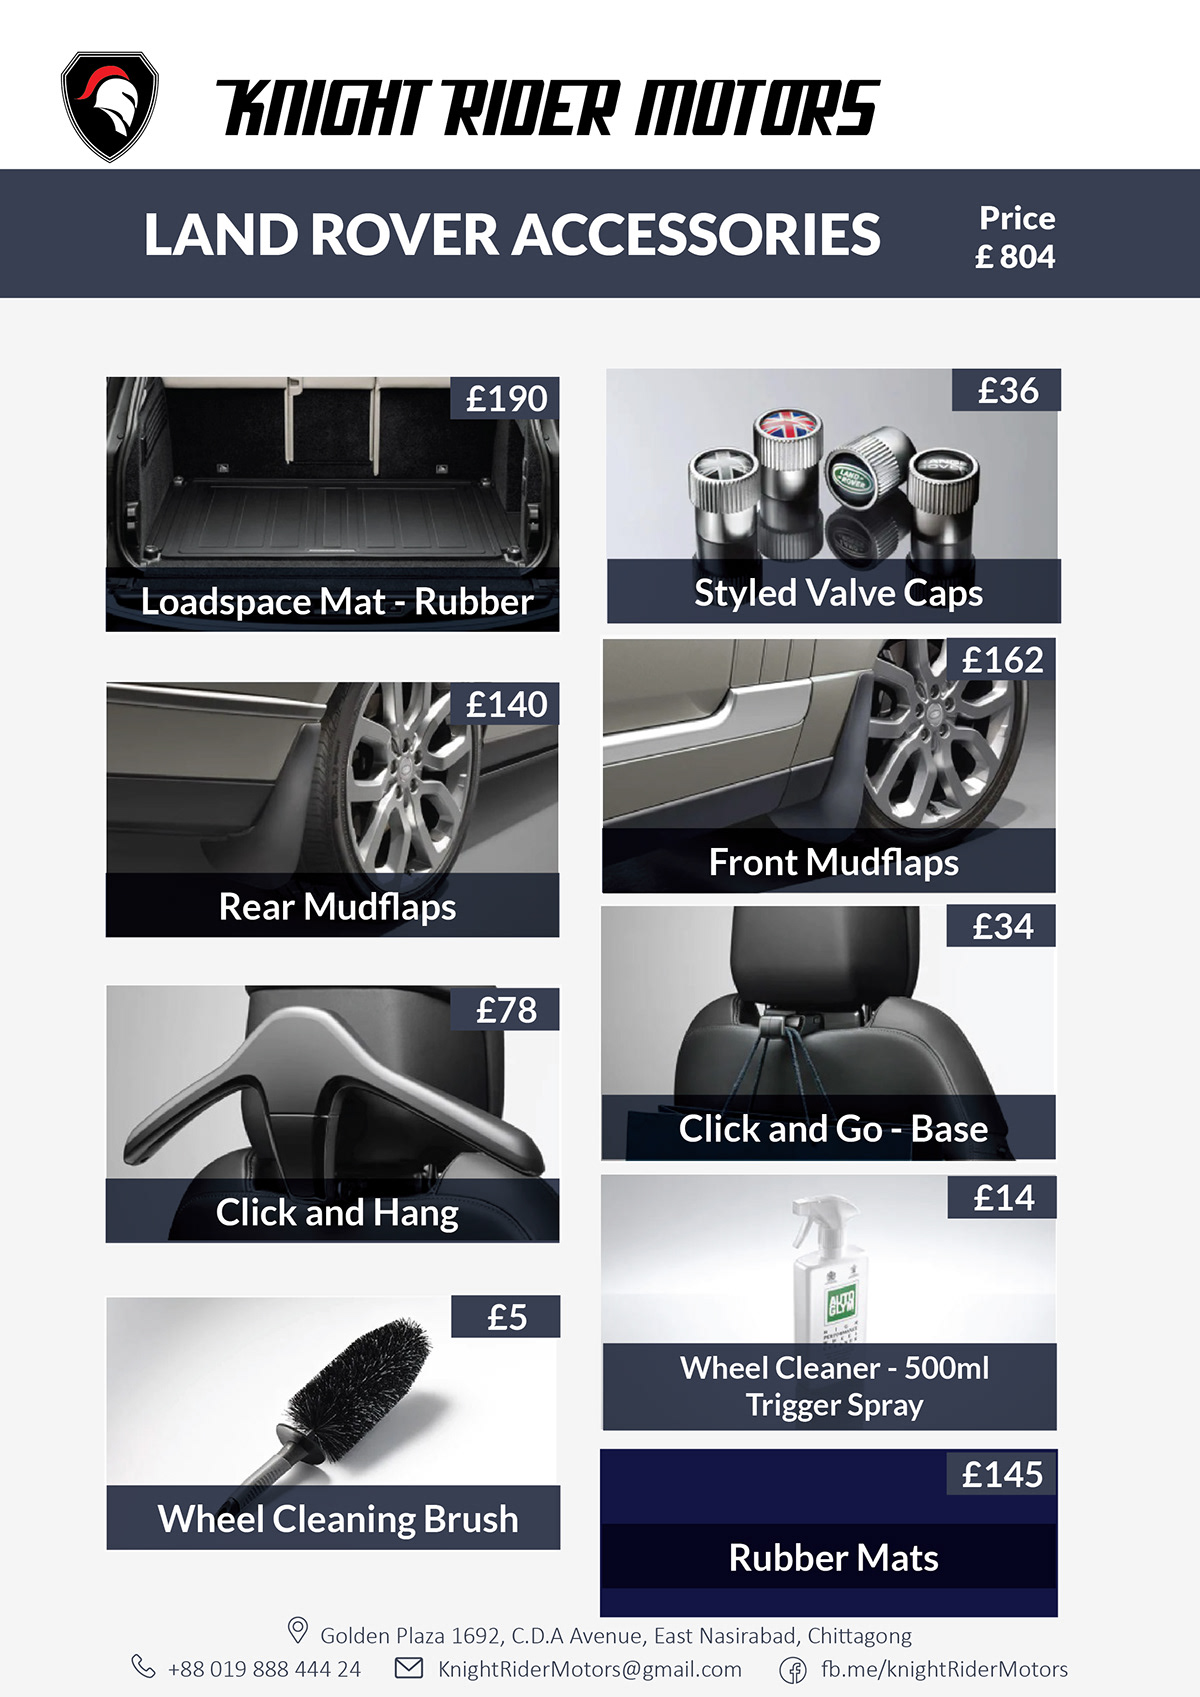 range rover car automotive   Pricing showcase brochure design